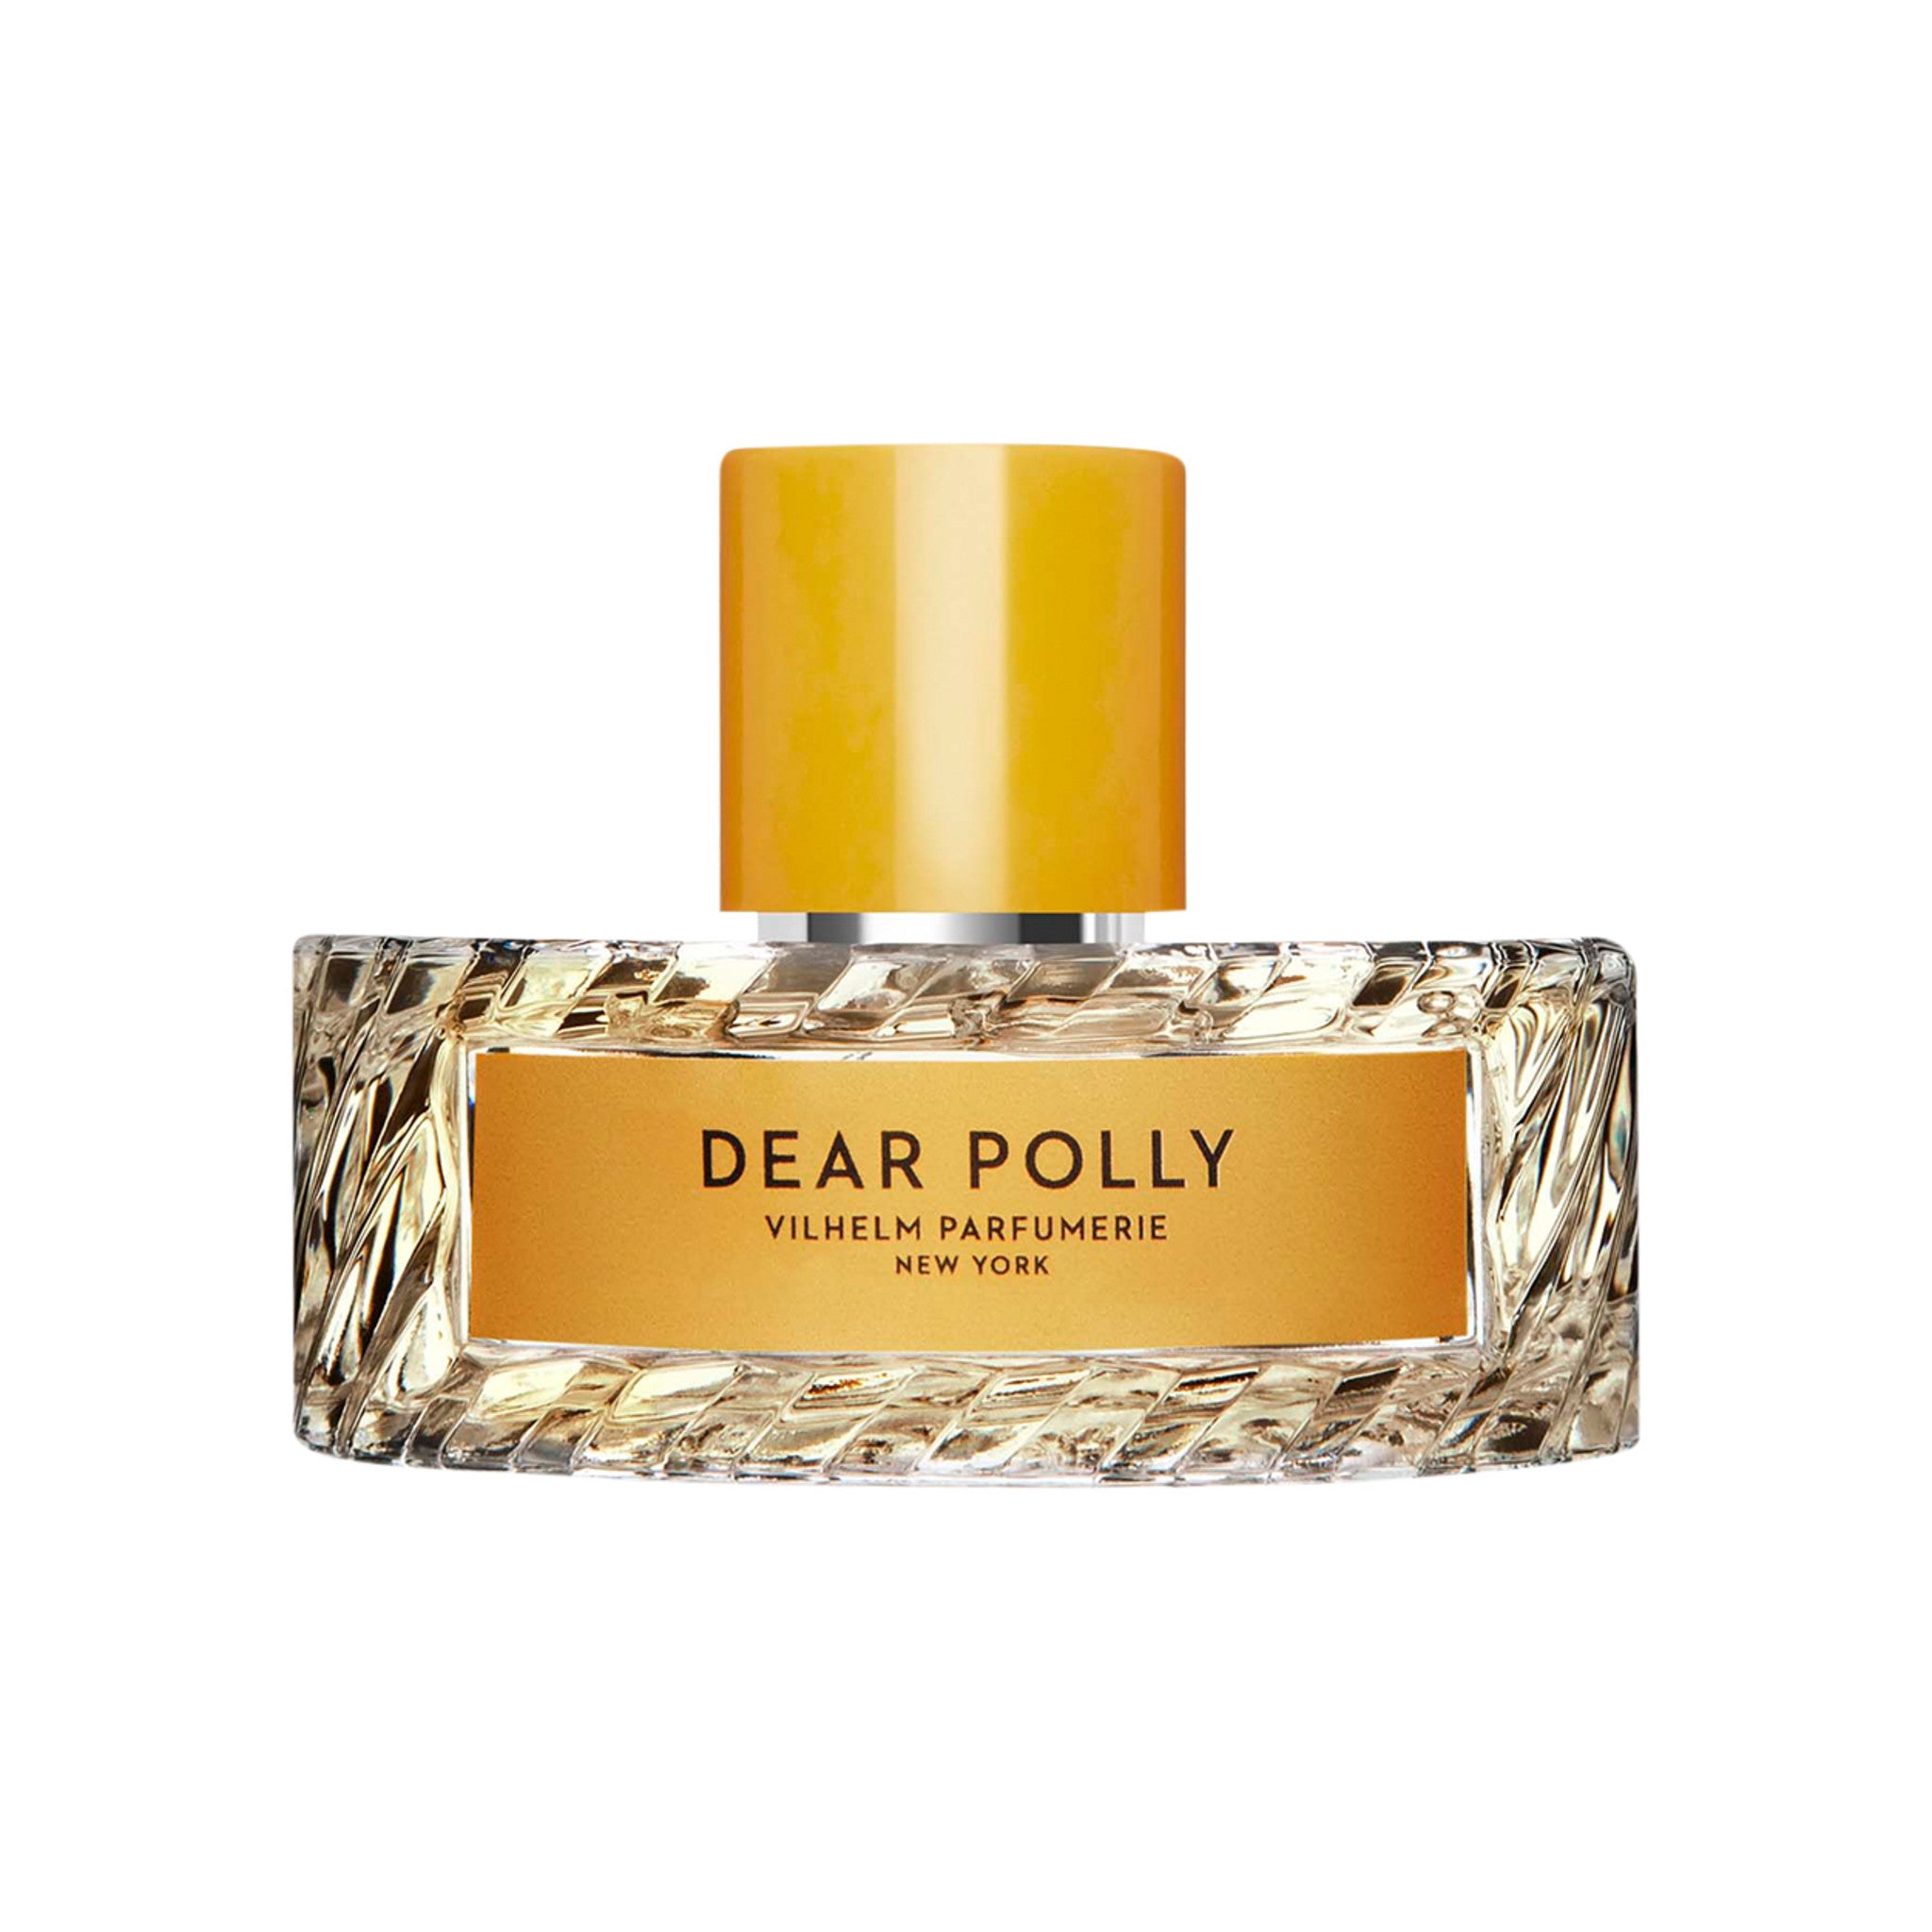 Vilhelm Parfumerie Dear Polly Eau de Parfum Size variant: 100 ml main image.